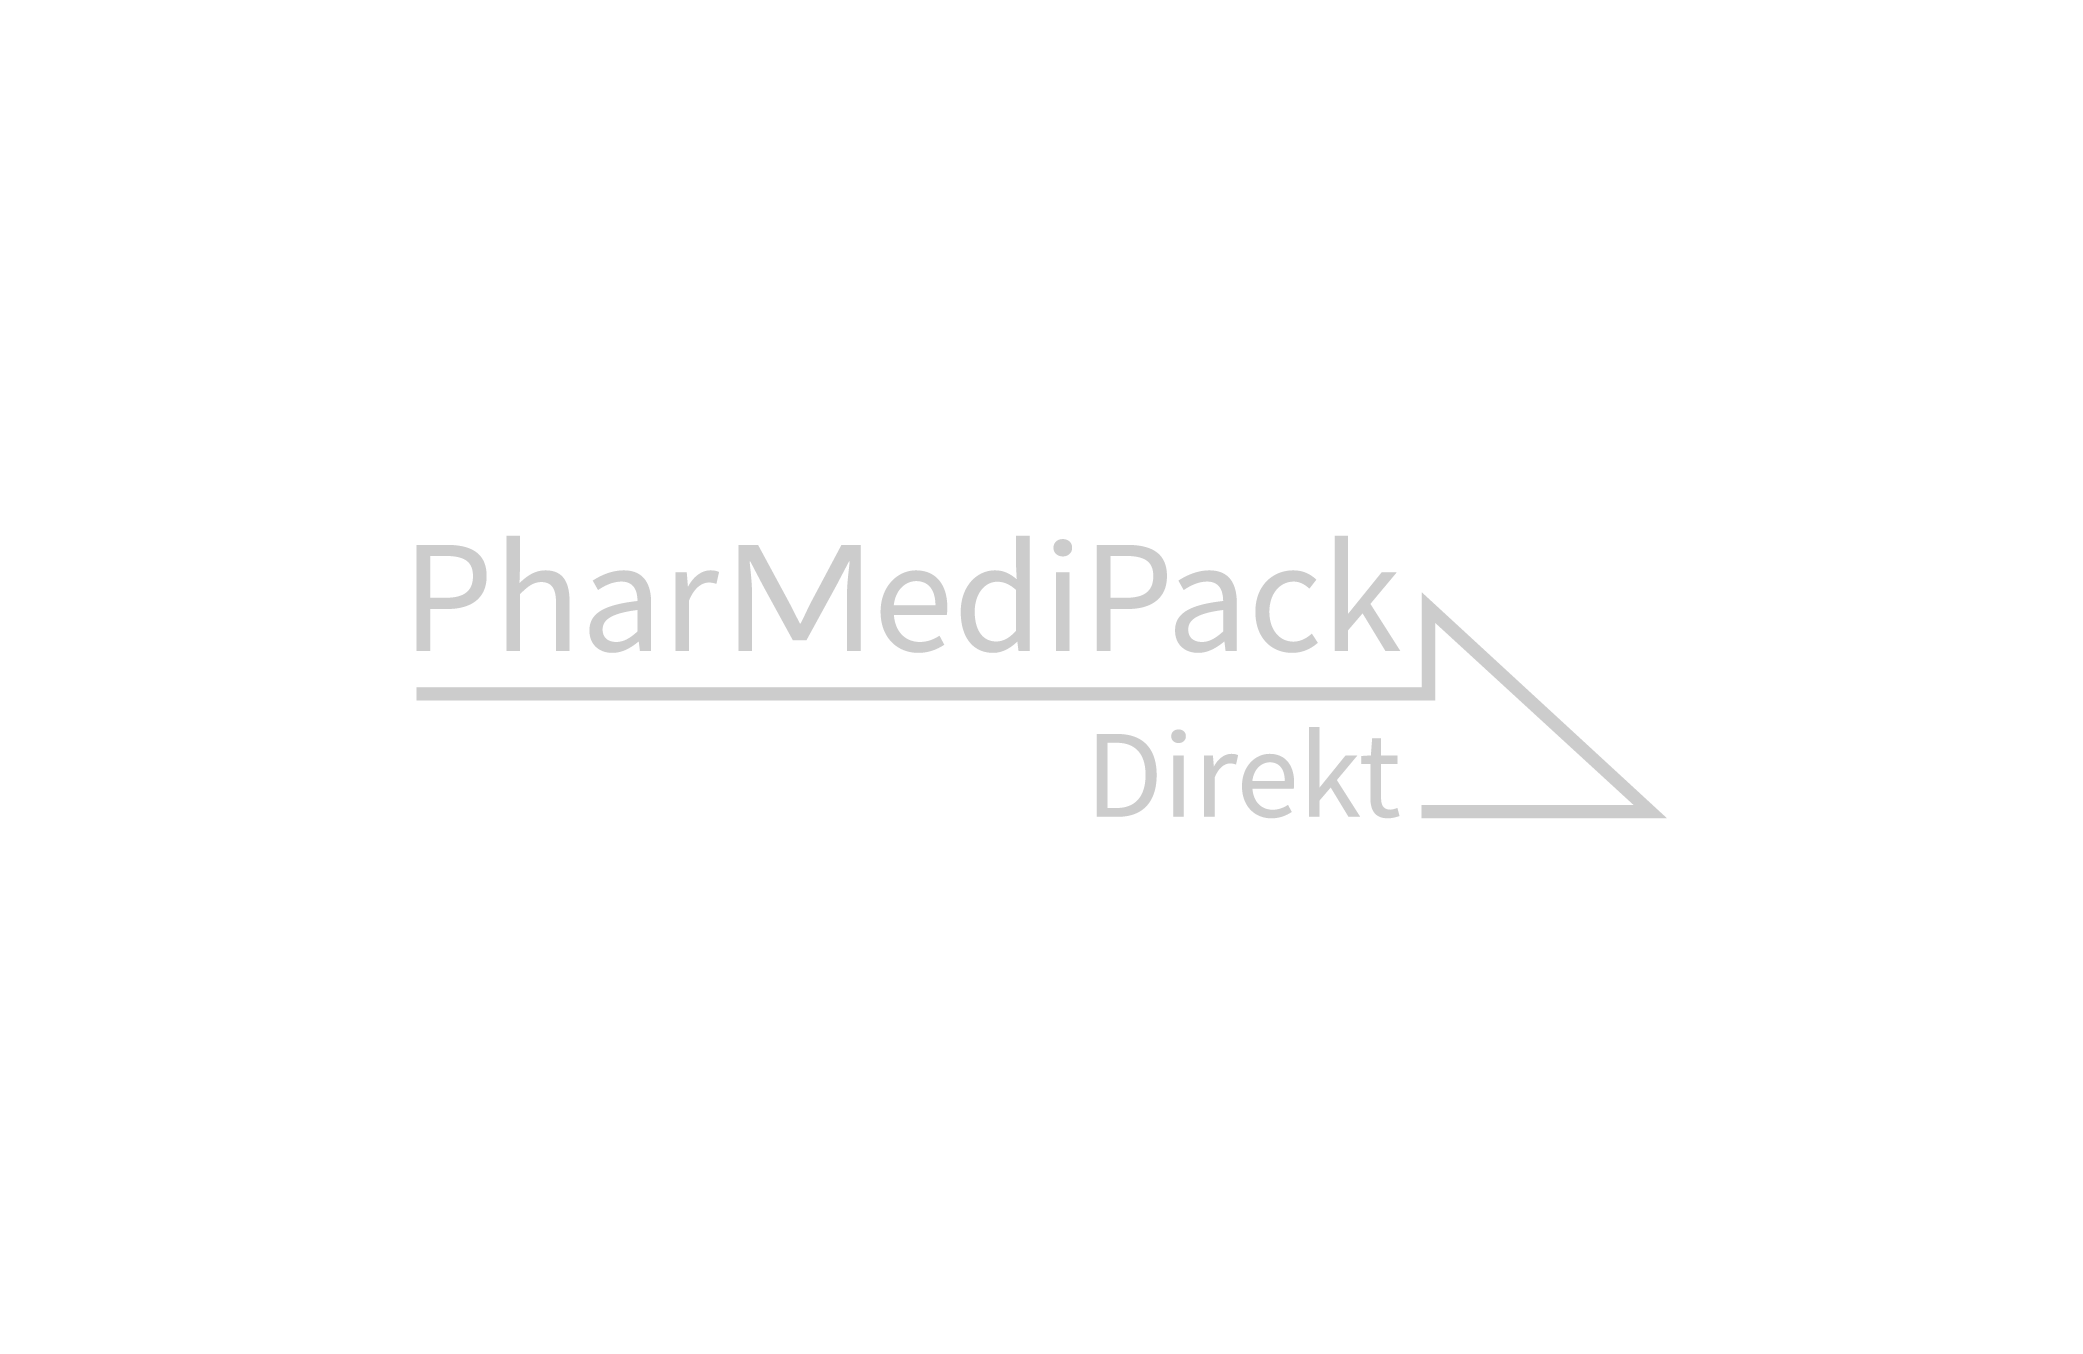 Pharmedipack Direct